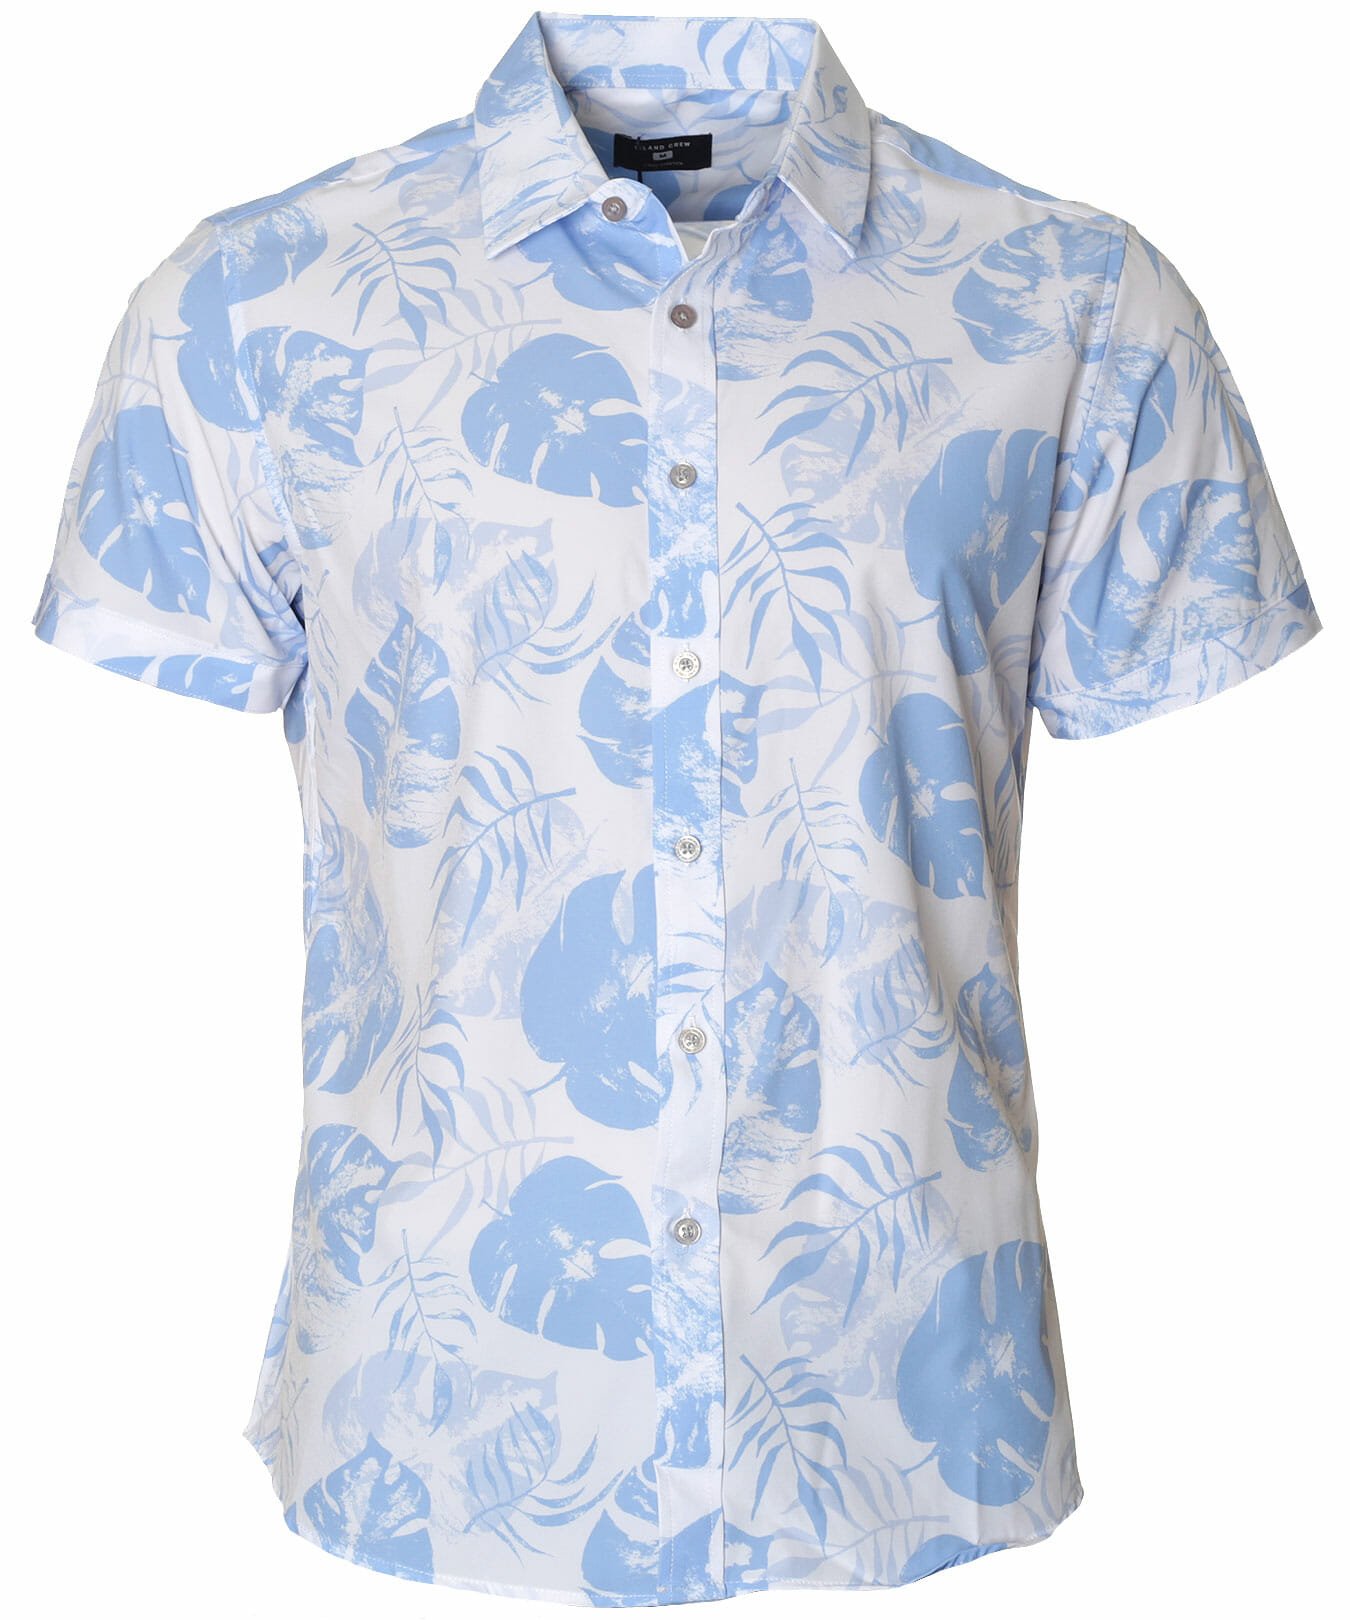 Men's Tropical Aloha Shirt